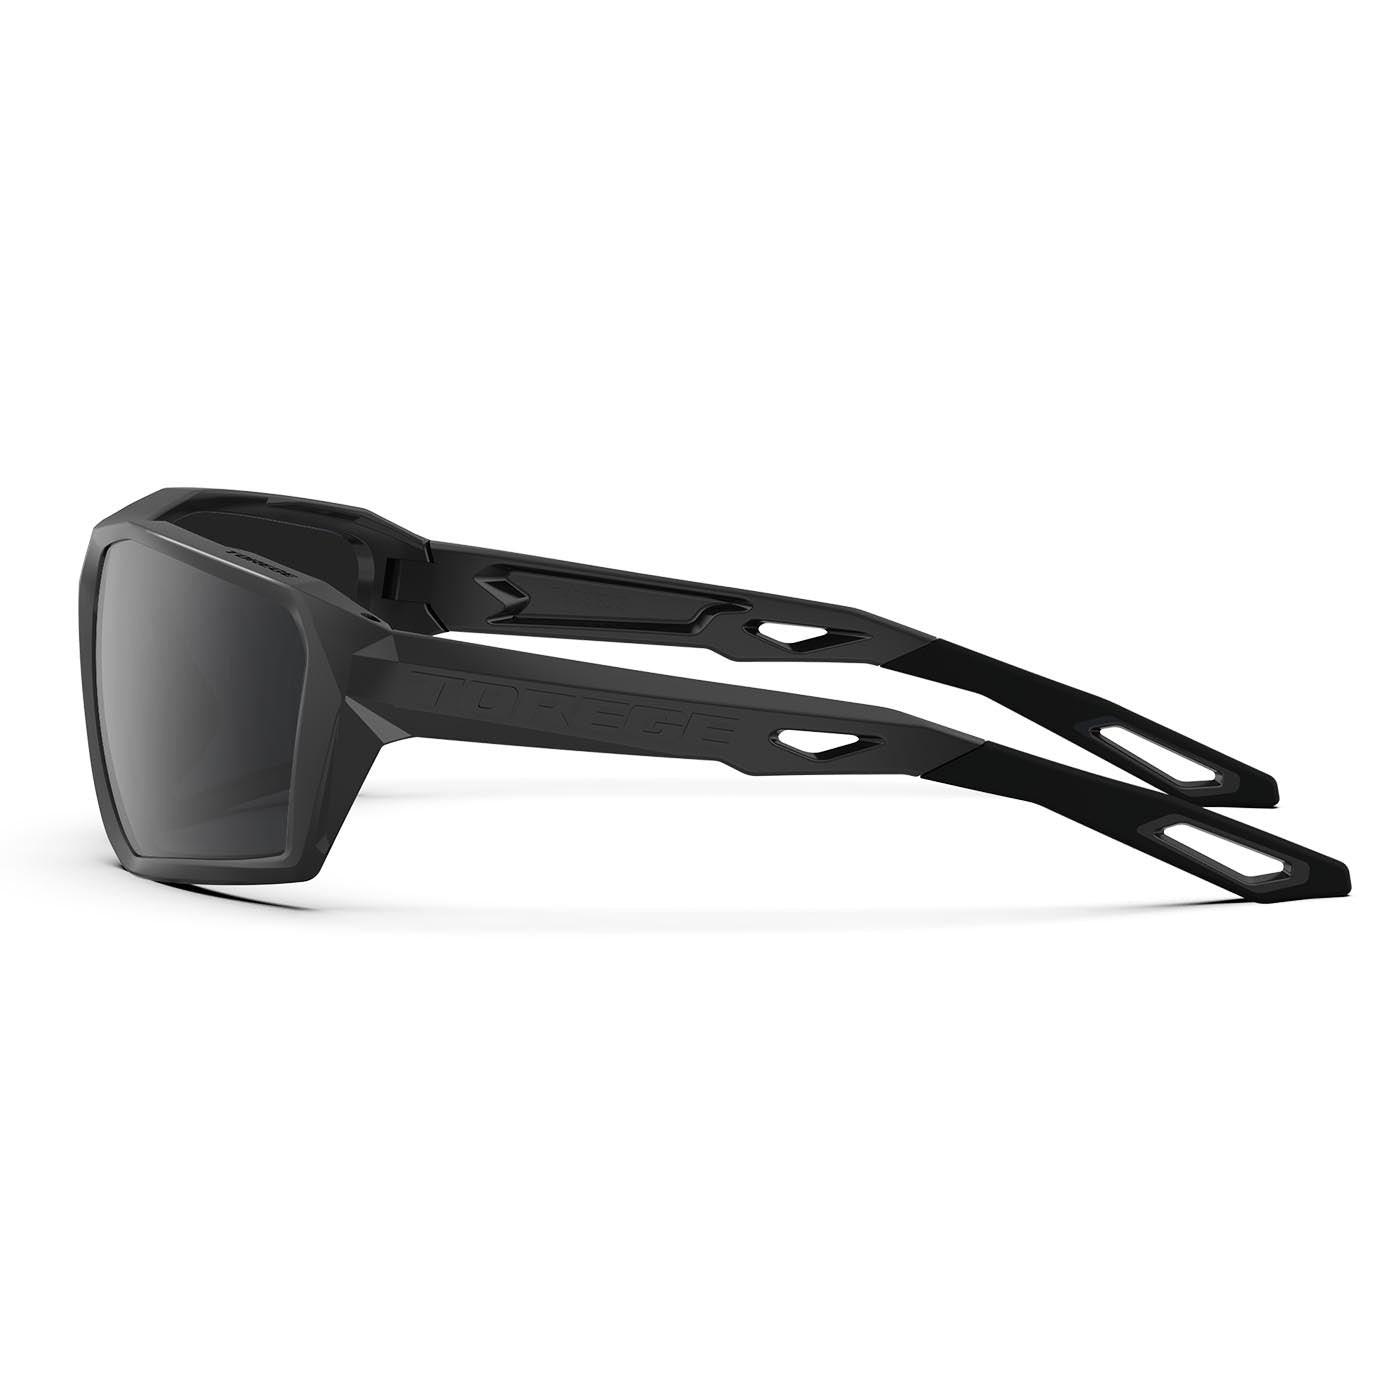 Torege Sports Polarized unisex Sunglasses for Fishing Cycling Running Golfing Sunglasses Durable Lens, Adult Unisex, Size: One size, Gray